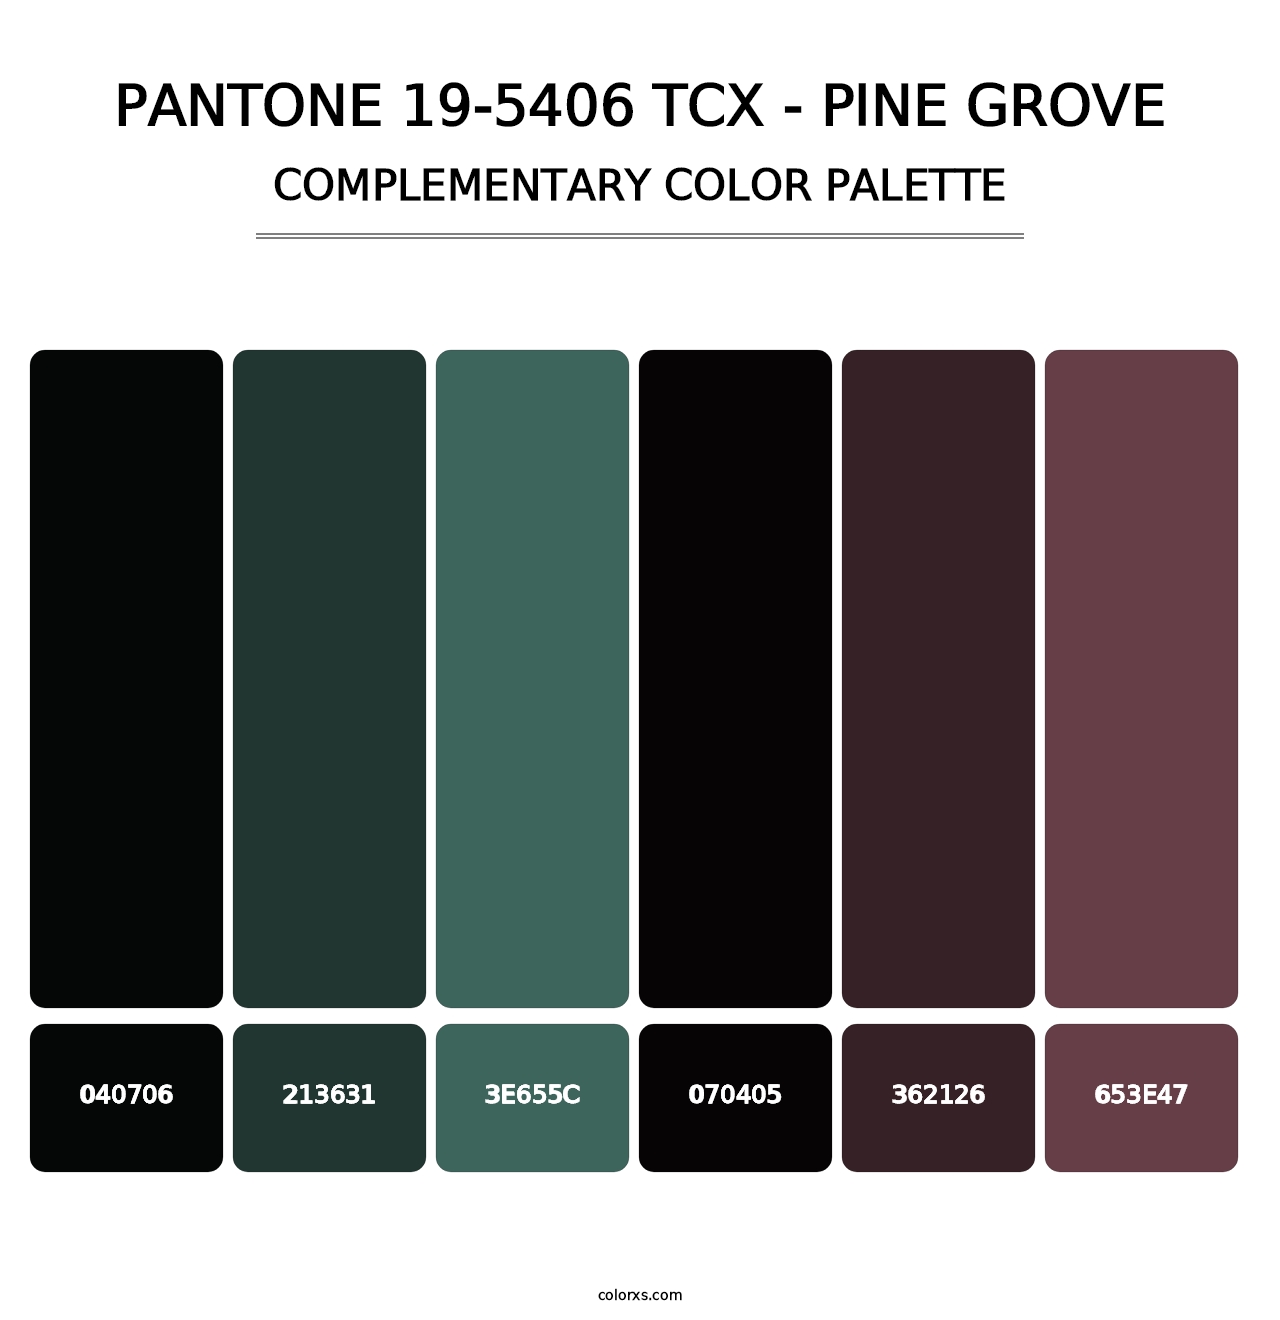 PANTONE 19-5406 TCX - Pine Grove - Complementary Color Palette